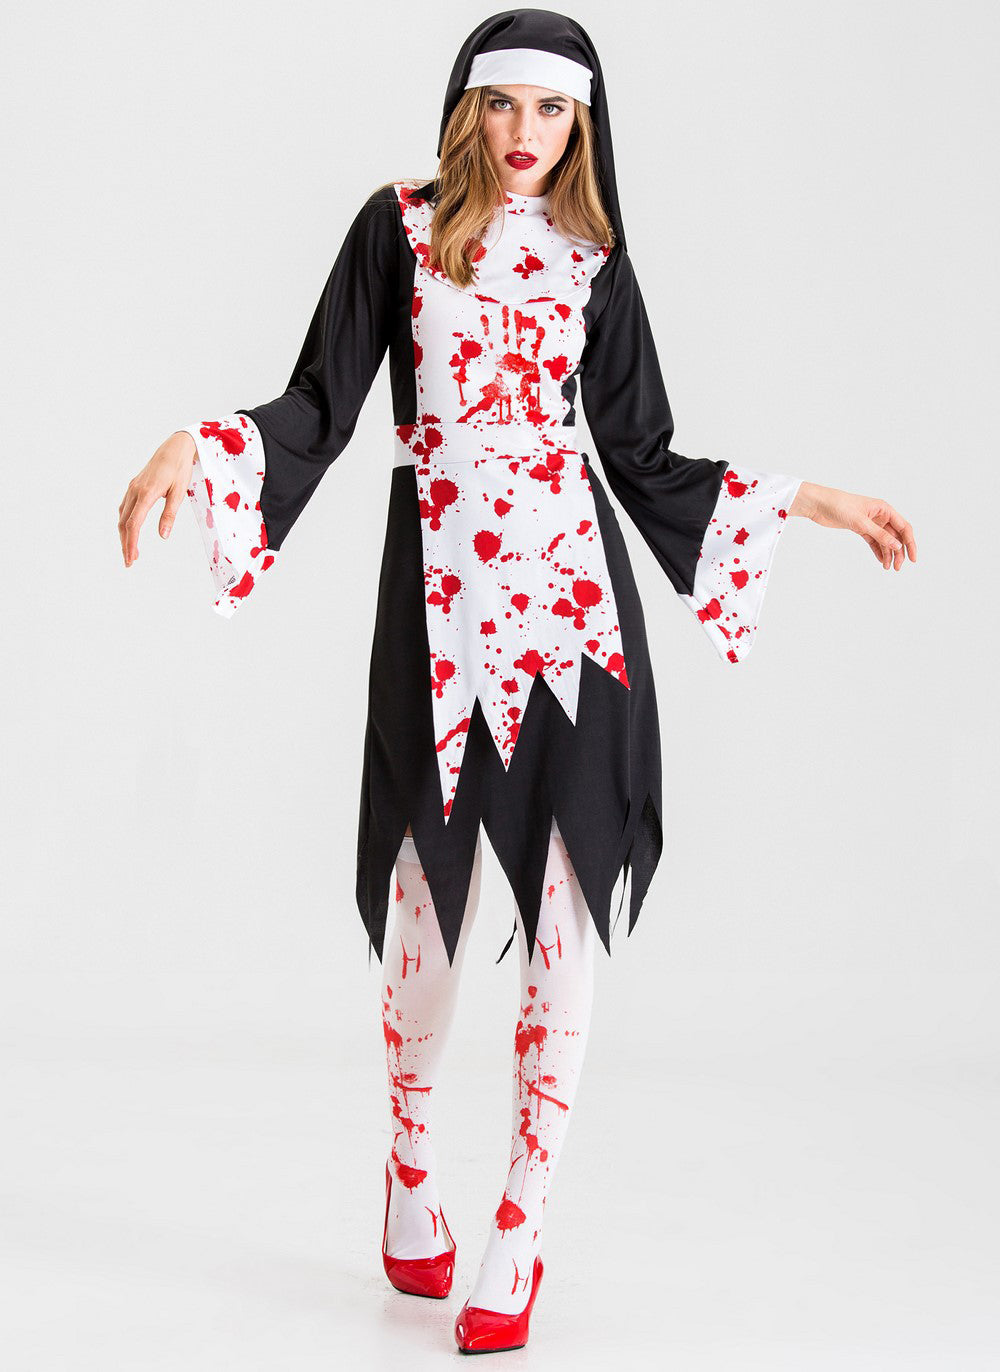 Vampire Zombie Nun Costume Halloween Costume Cos Costume Cosplay Blood Dripping Zombie Nun Costume